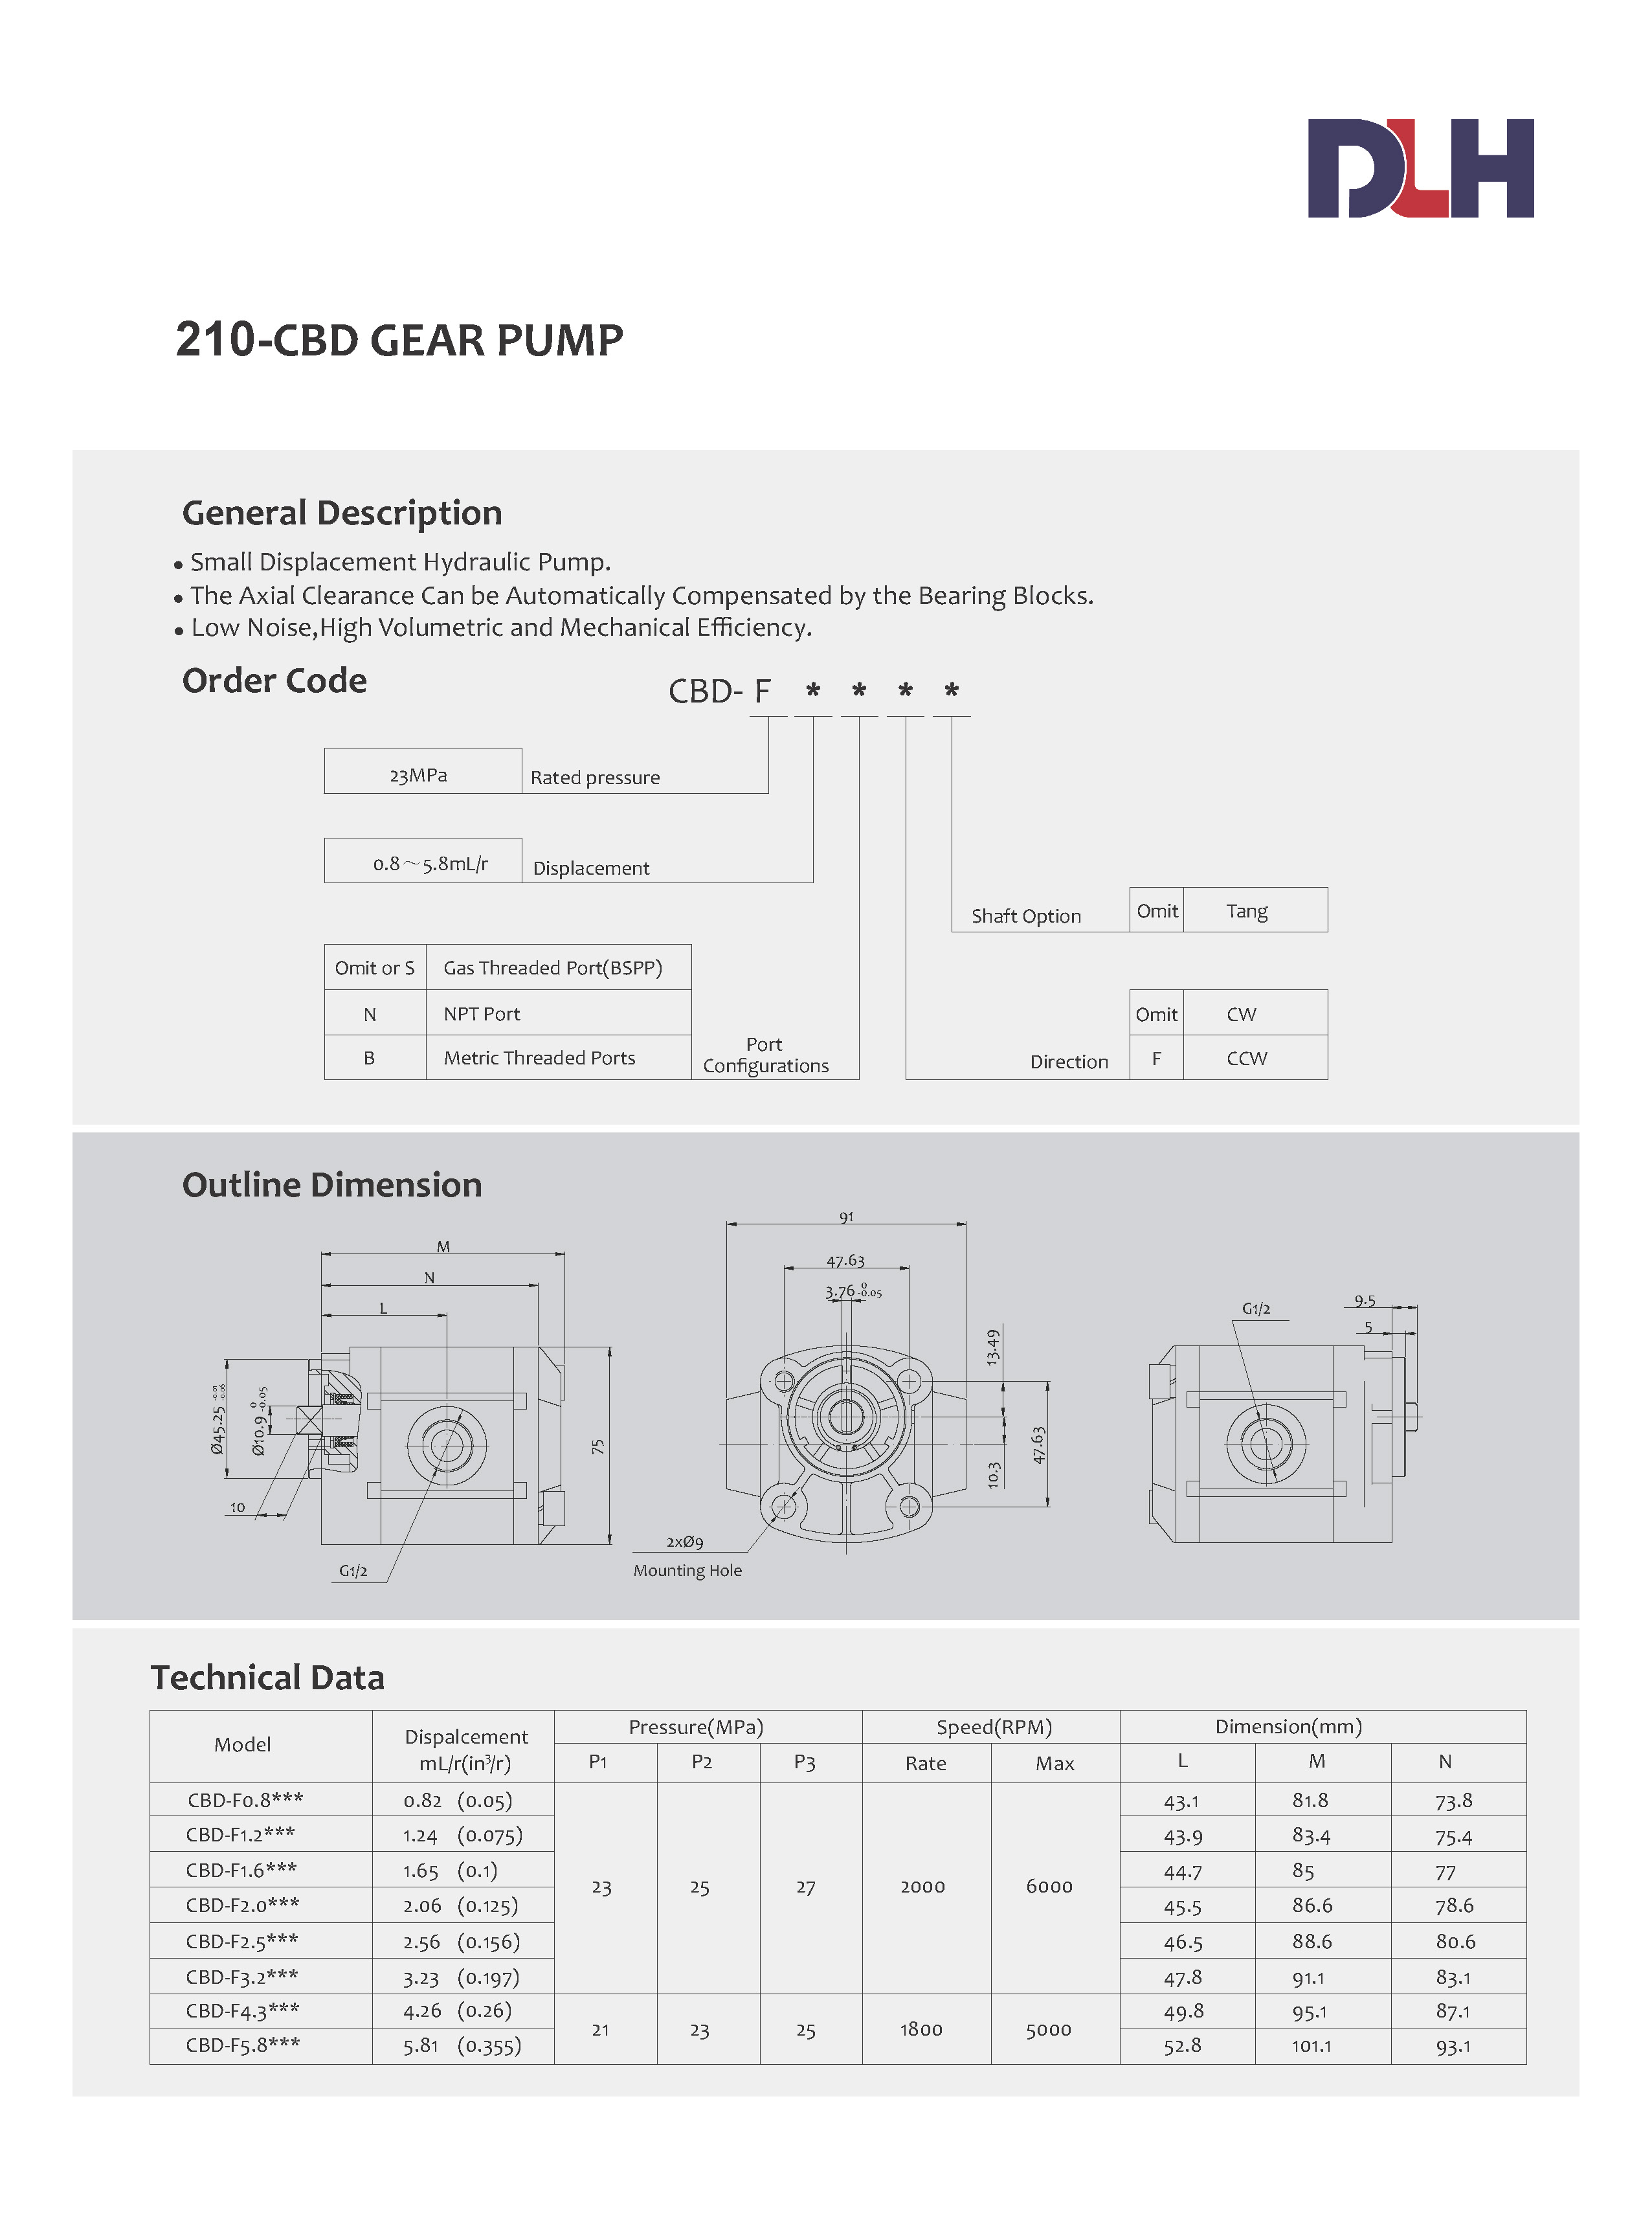 CBD Gear Pumps